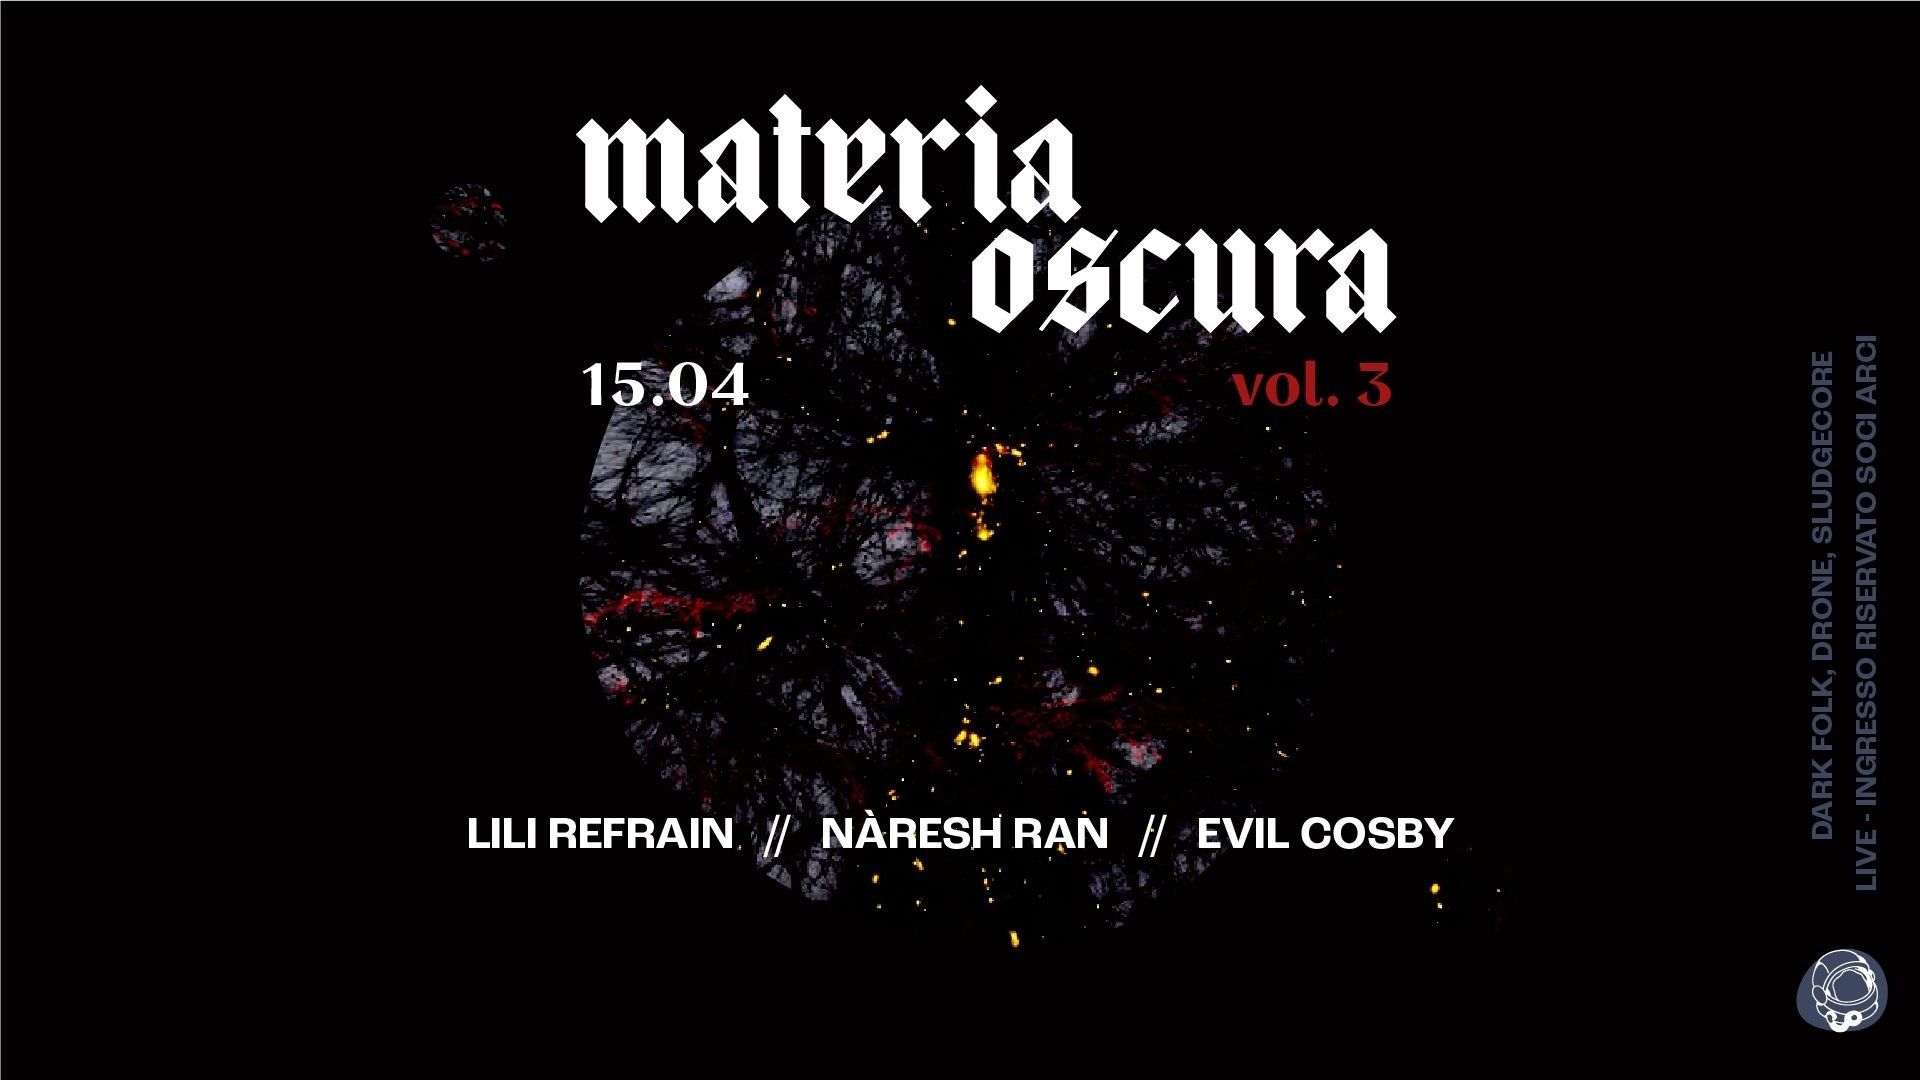 Materia Oscura Vol.3 - Lili Refrain, Nàresh Ran, Evil Cosby